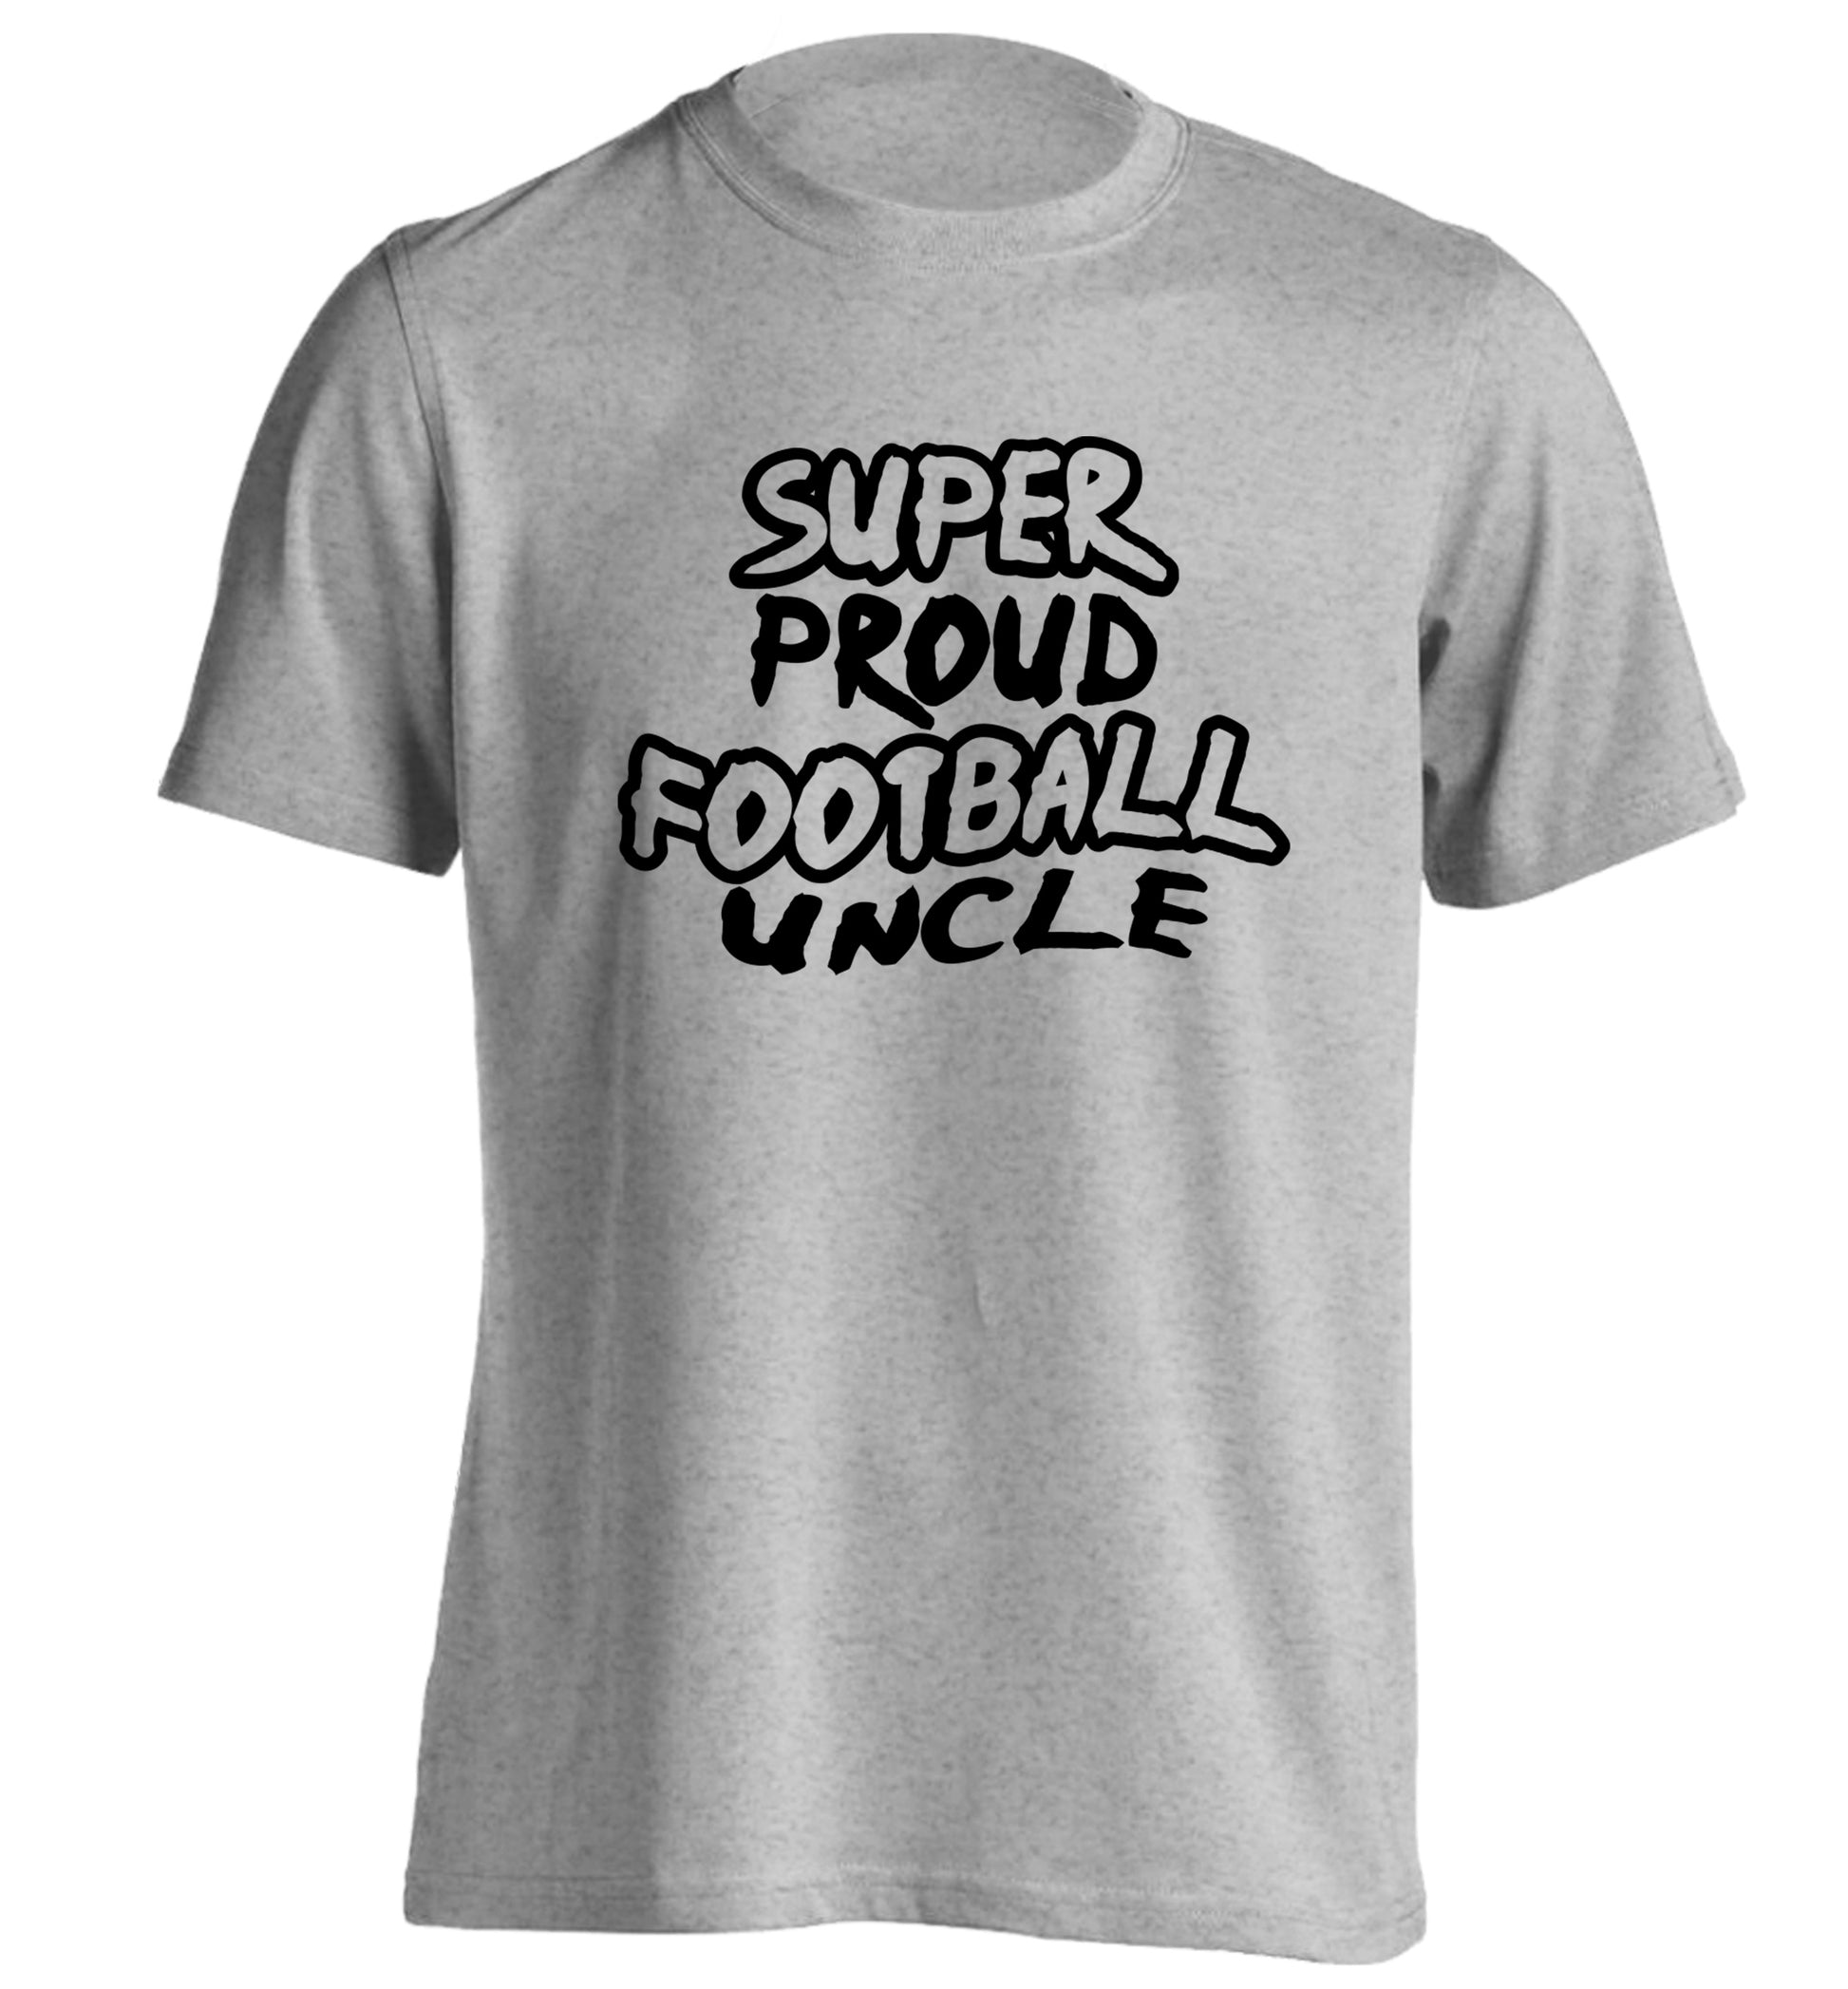 Super proud football uncle adults unisexgrey Tshirt 2XL